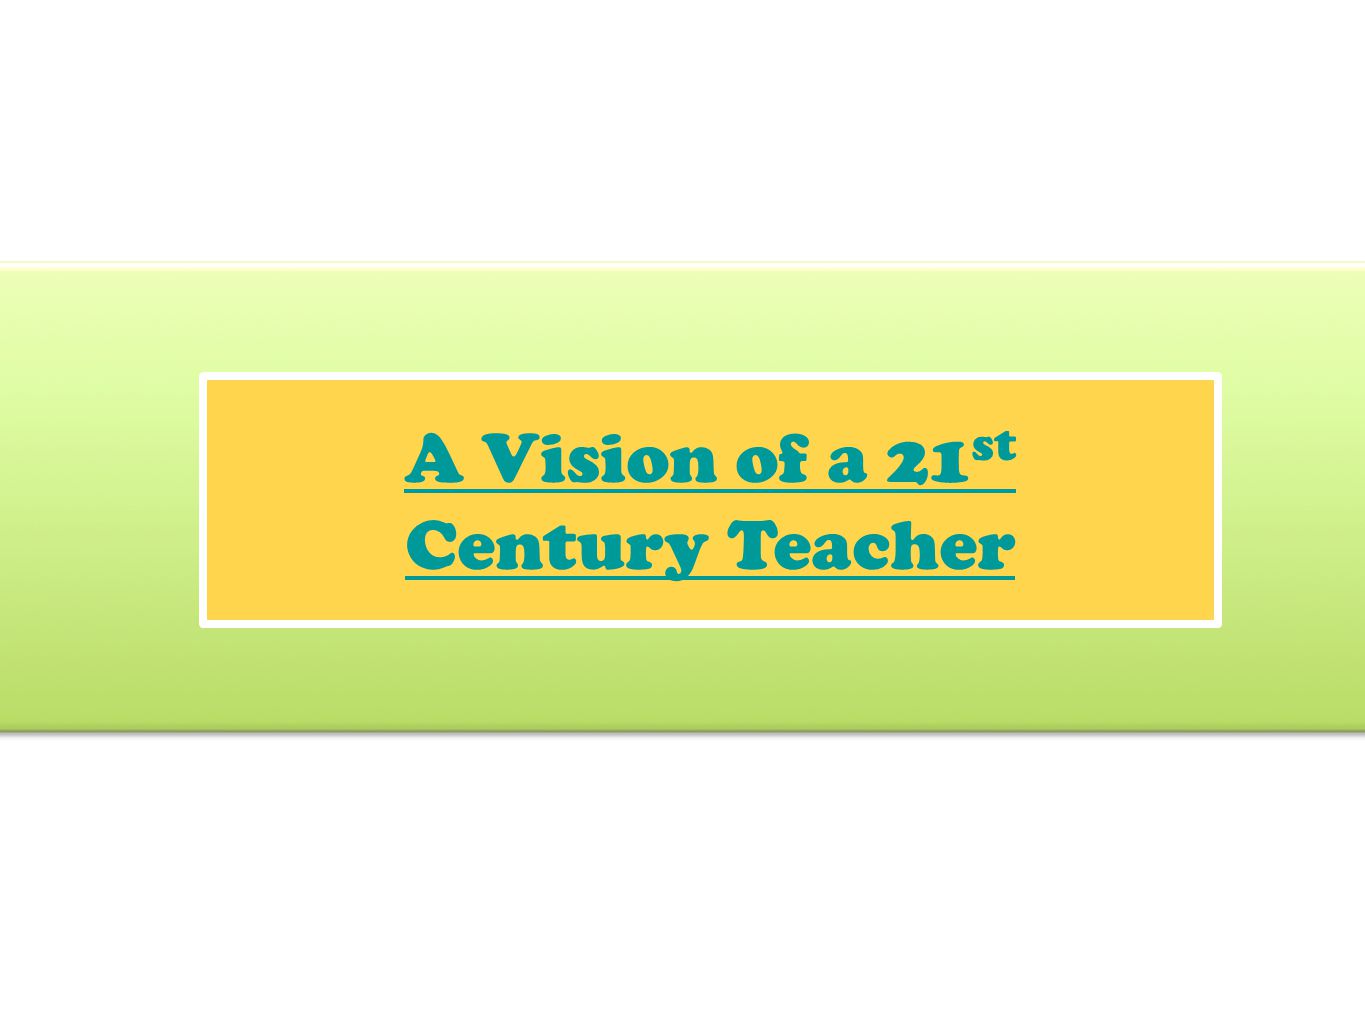 A Vision of a 21st Century Teacher